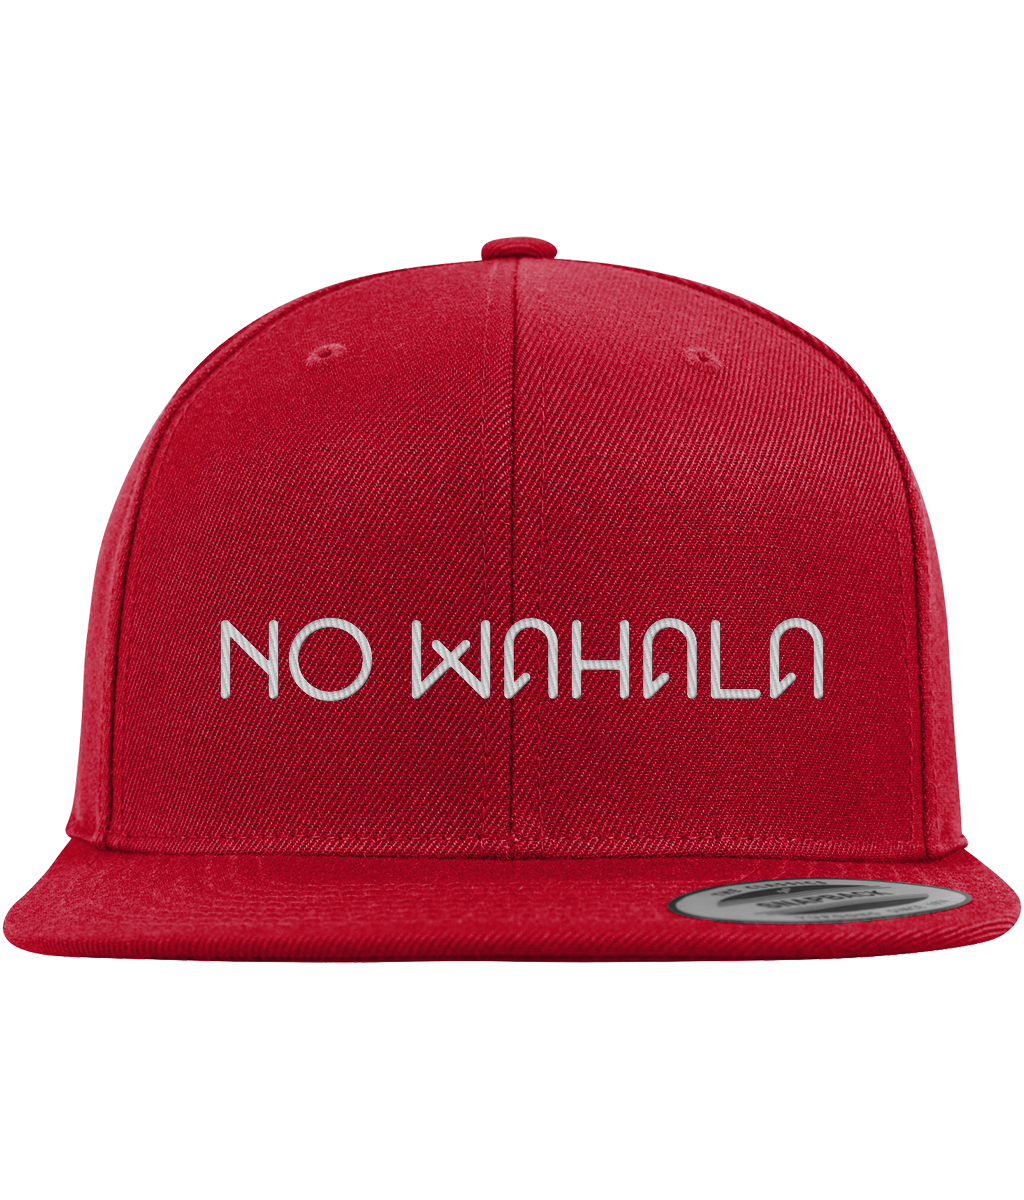 No Wahala - Classic Snapback